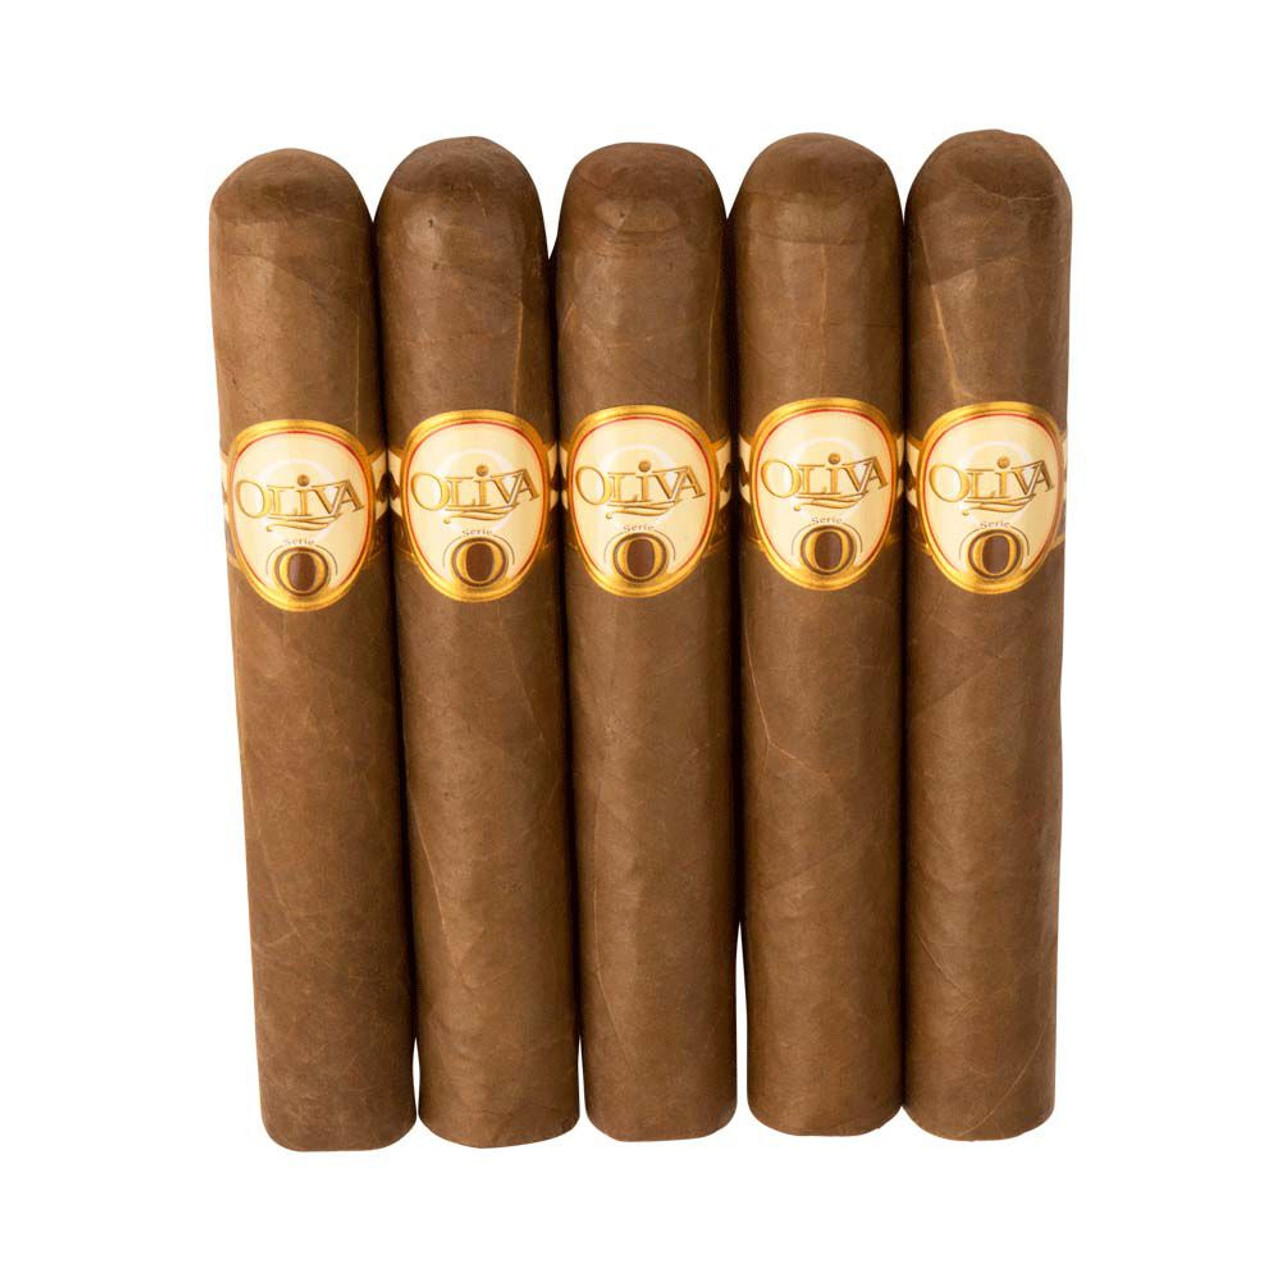 Oliva Serie O Double Toro Cigars - 6 x 60 (Pack of 5)